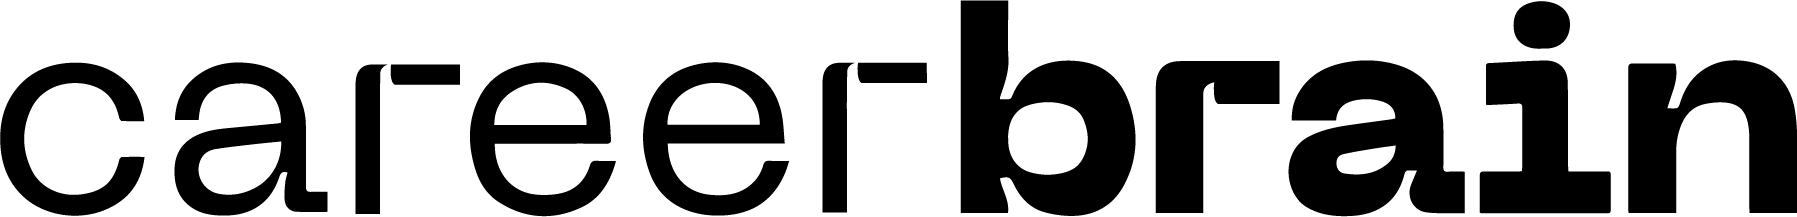 careerbrain logo